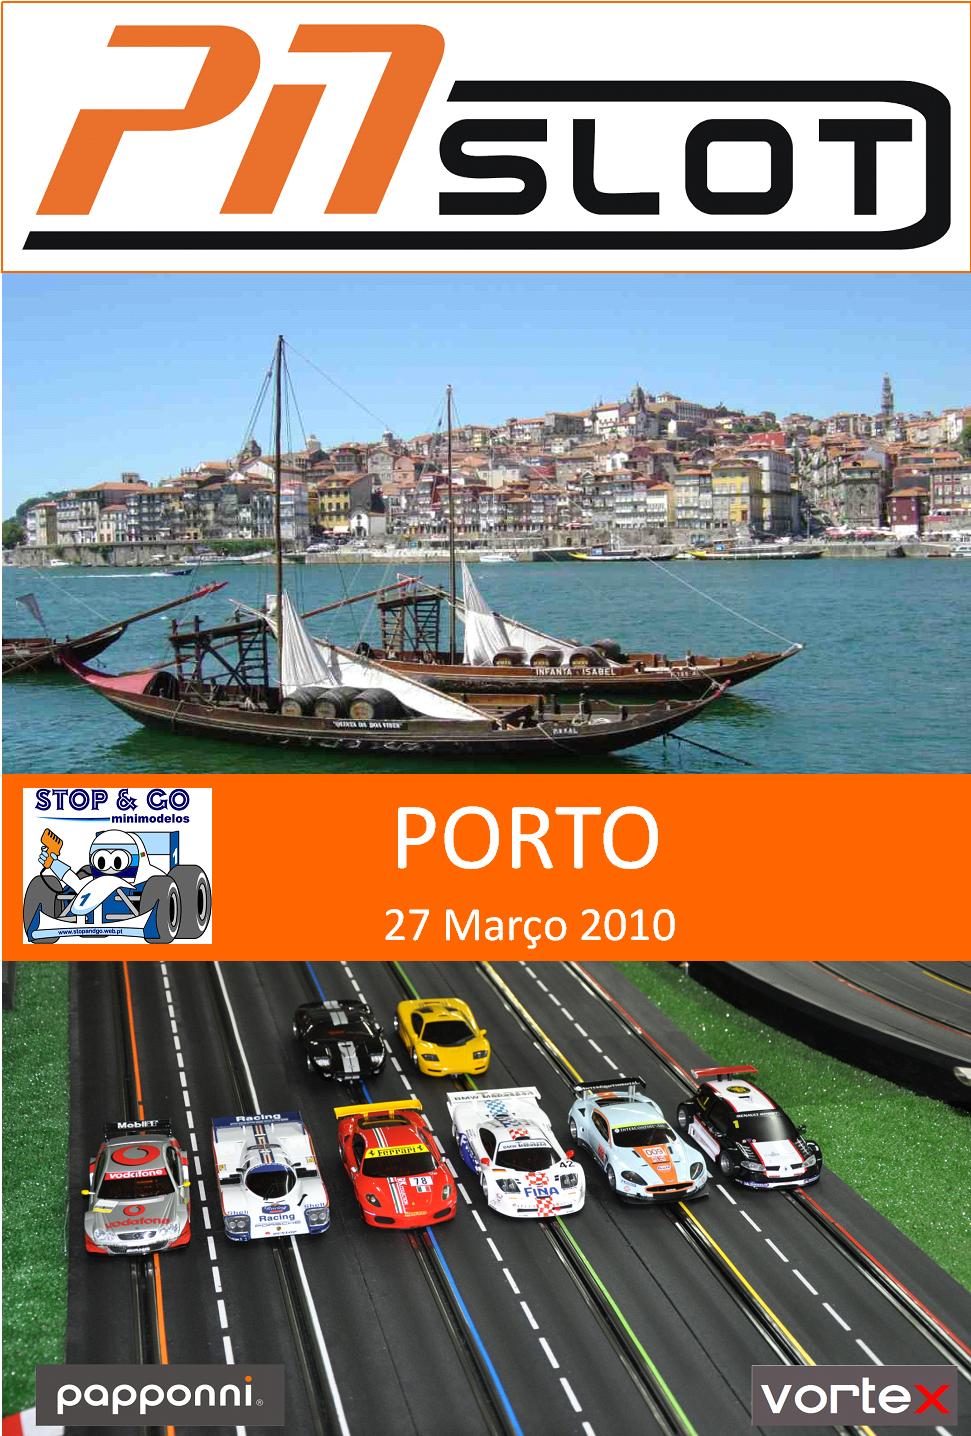 slot fórum portugal